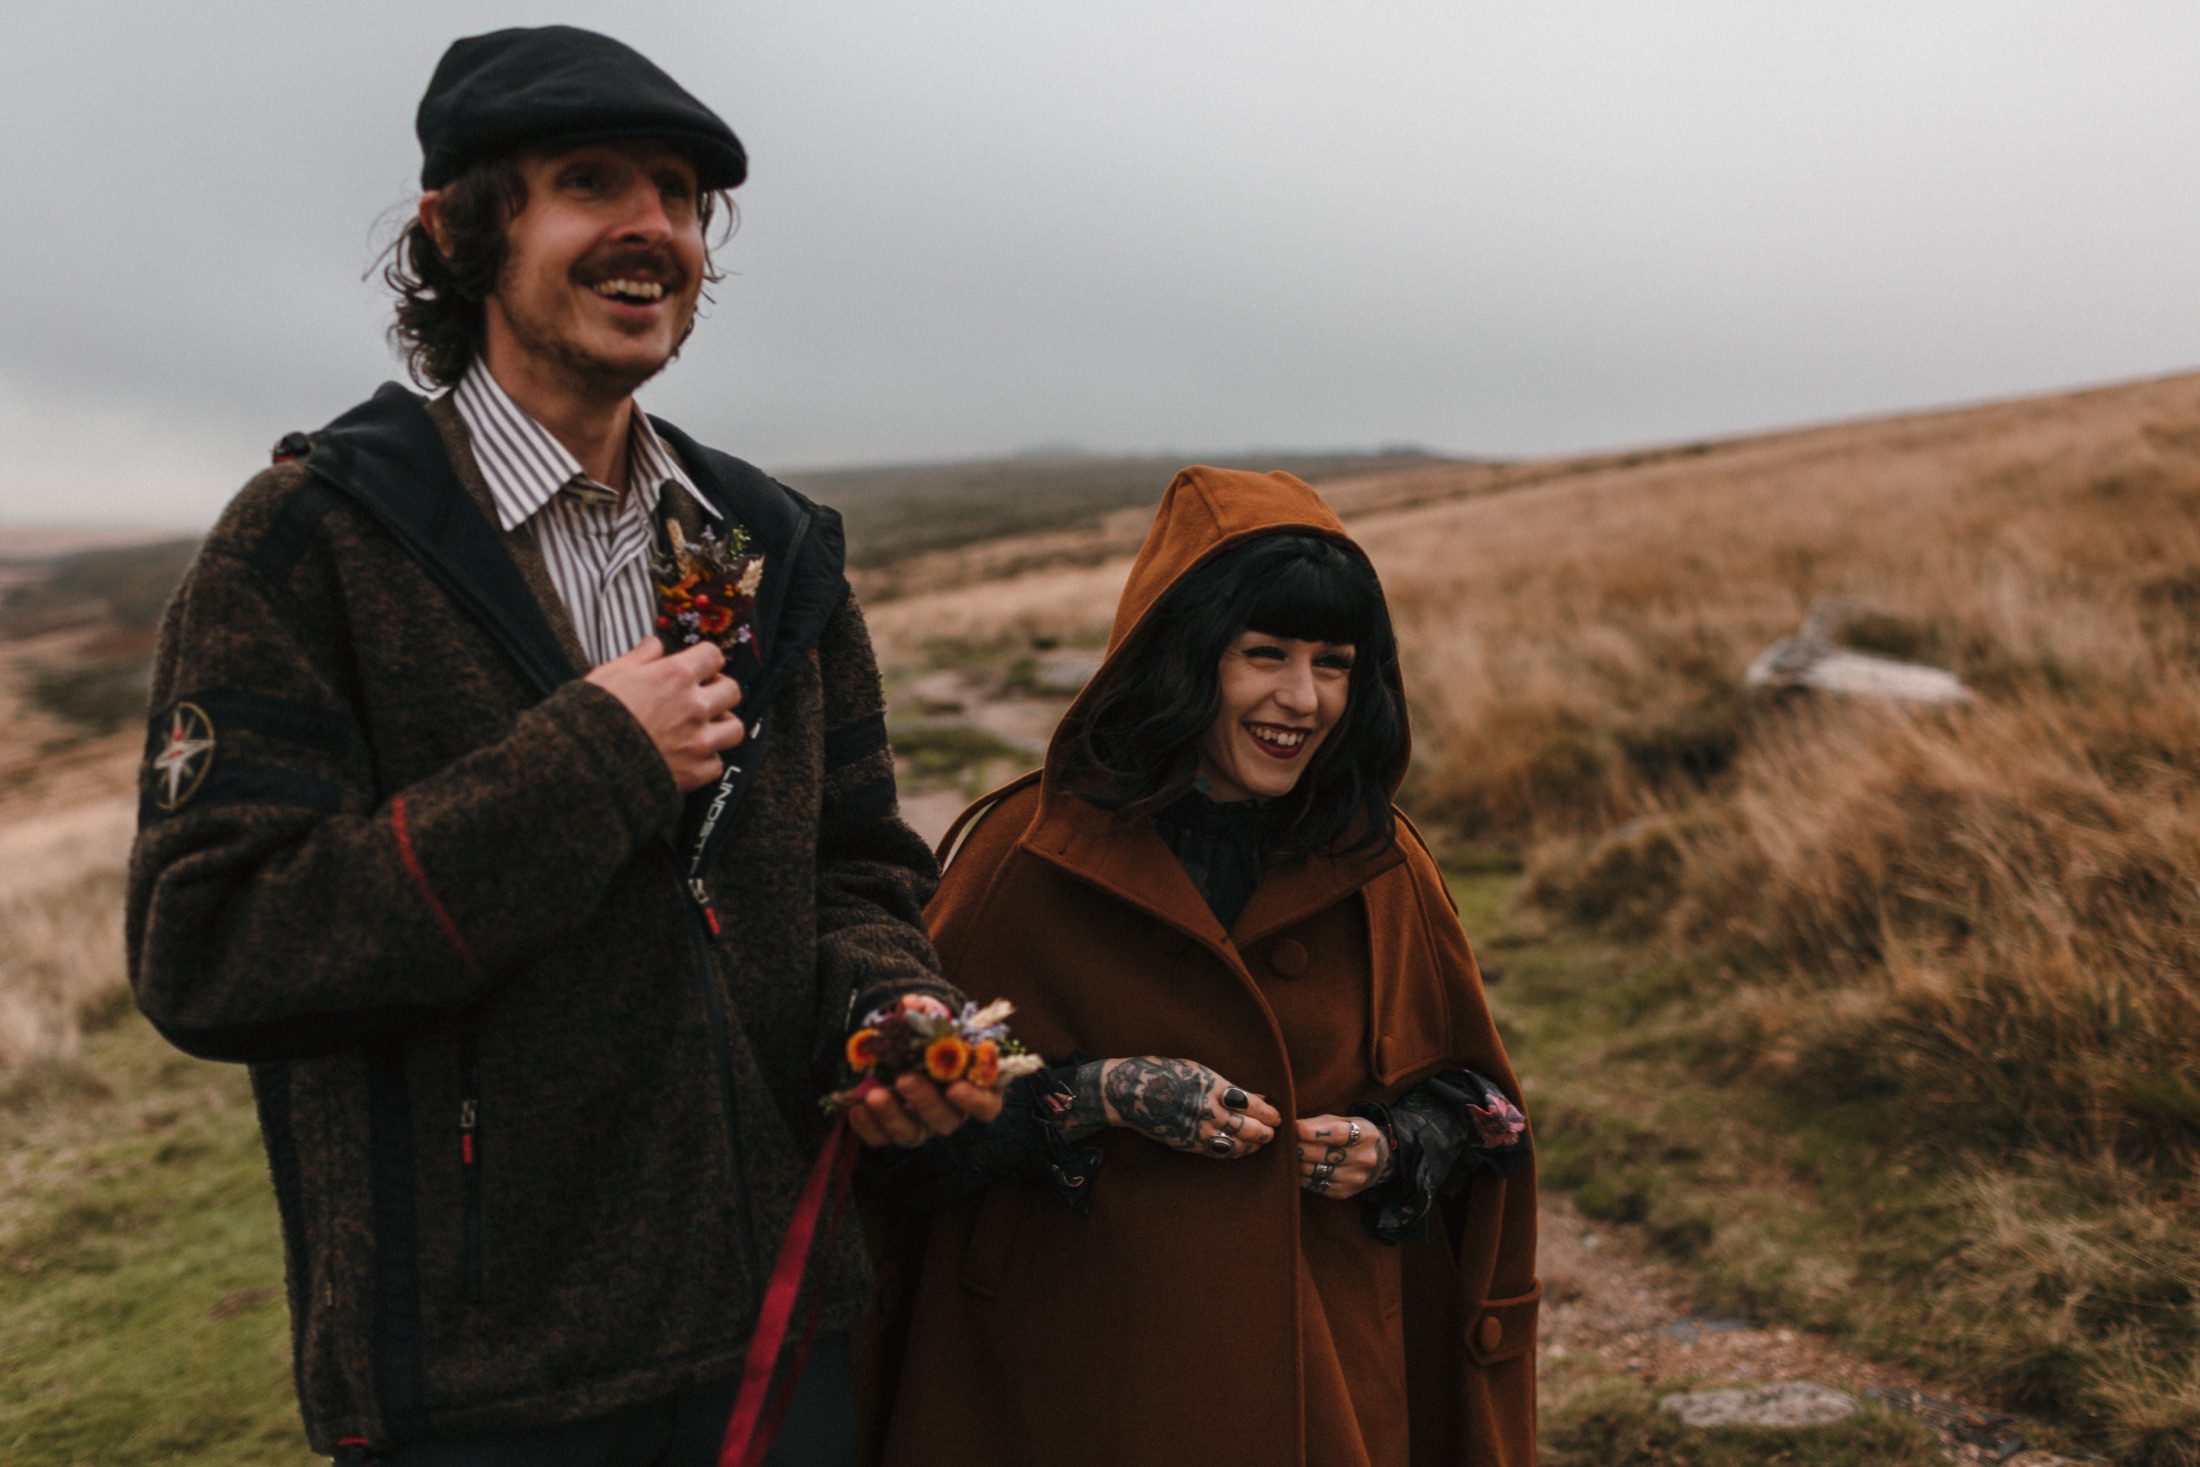 A Pagan Samhain Wedding on Dartmoor at the edge of Wistman's Woods